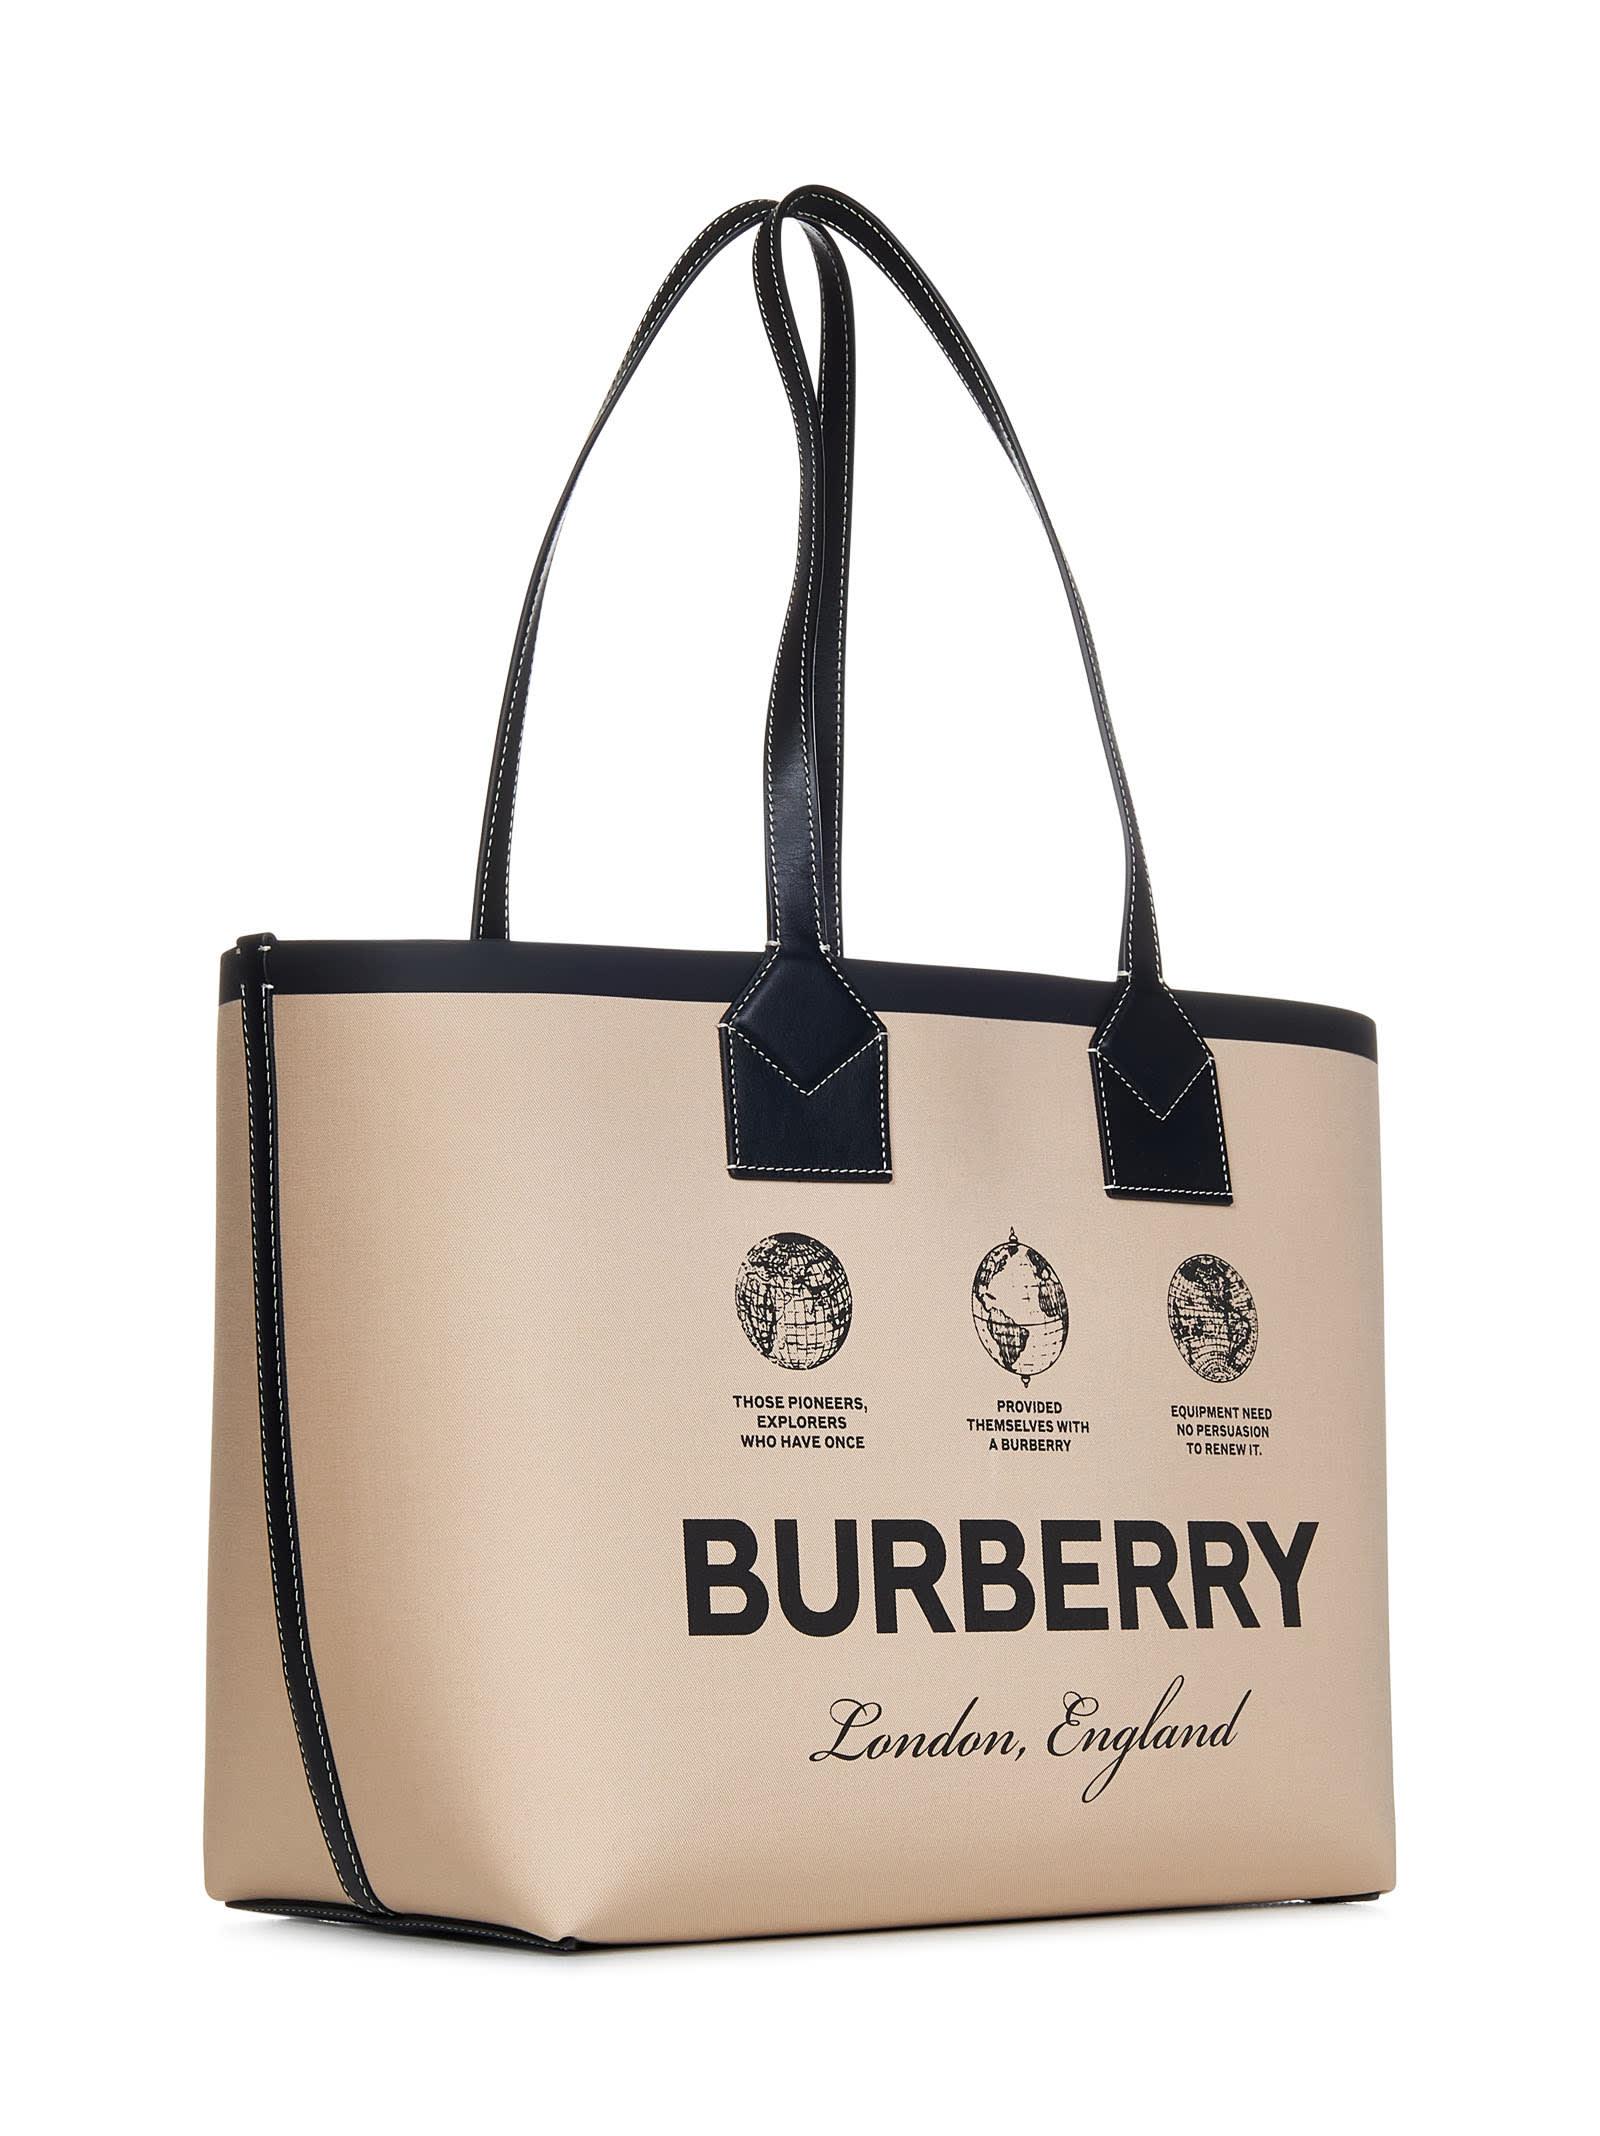 Burberry London Tote Bag